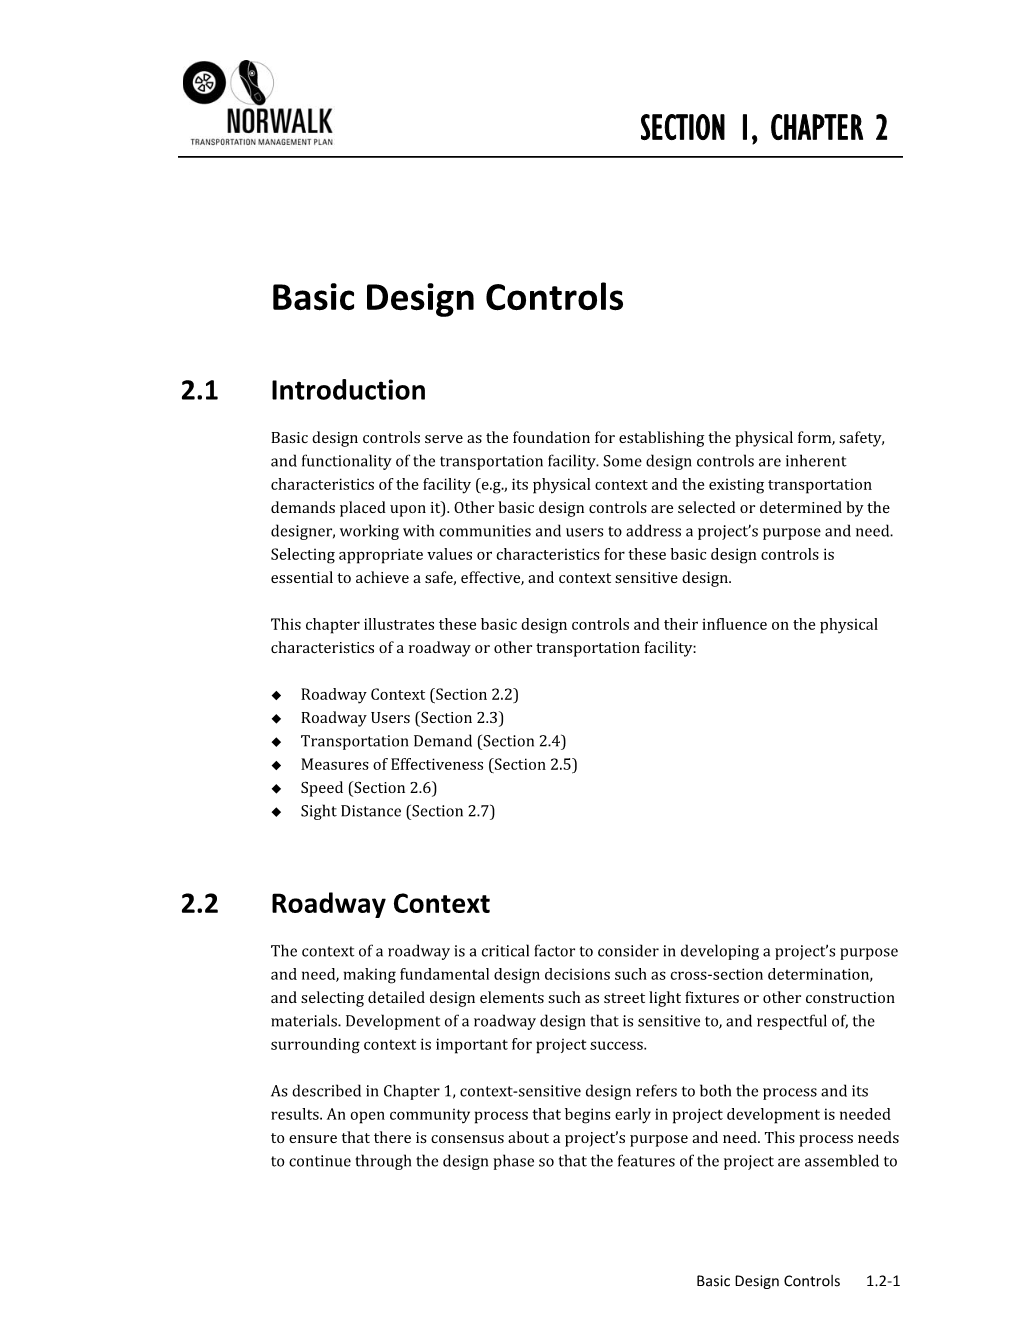 Basic Design Controls